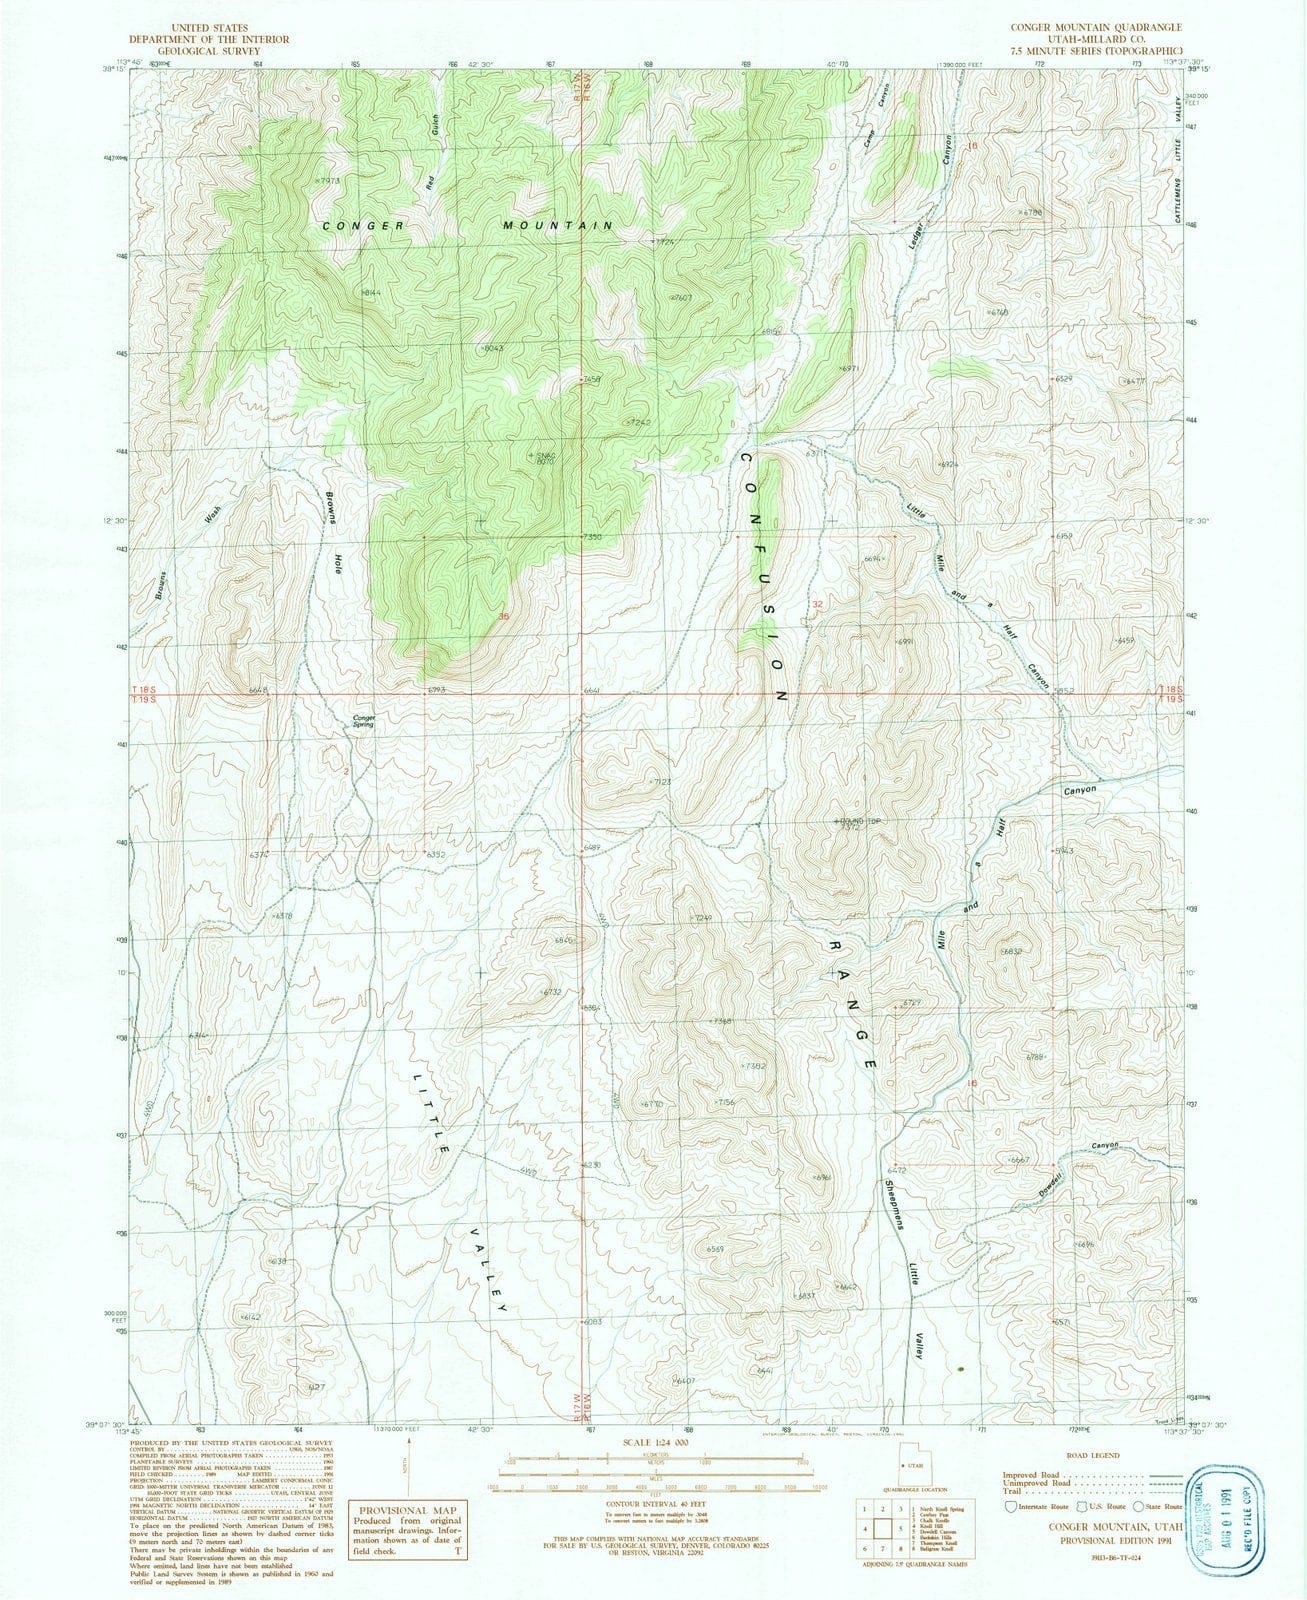 1991 Conger Mountain, UT - Utah - USGS Topographic Map